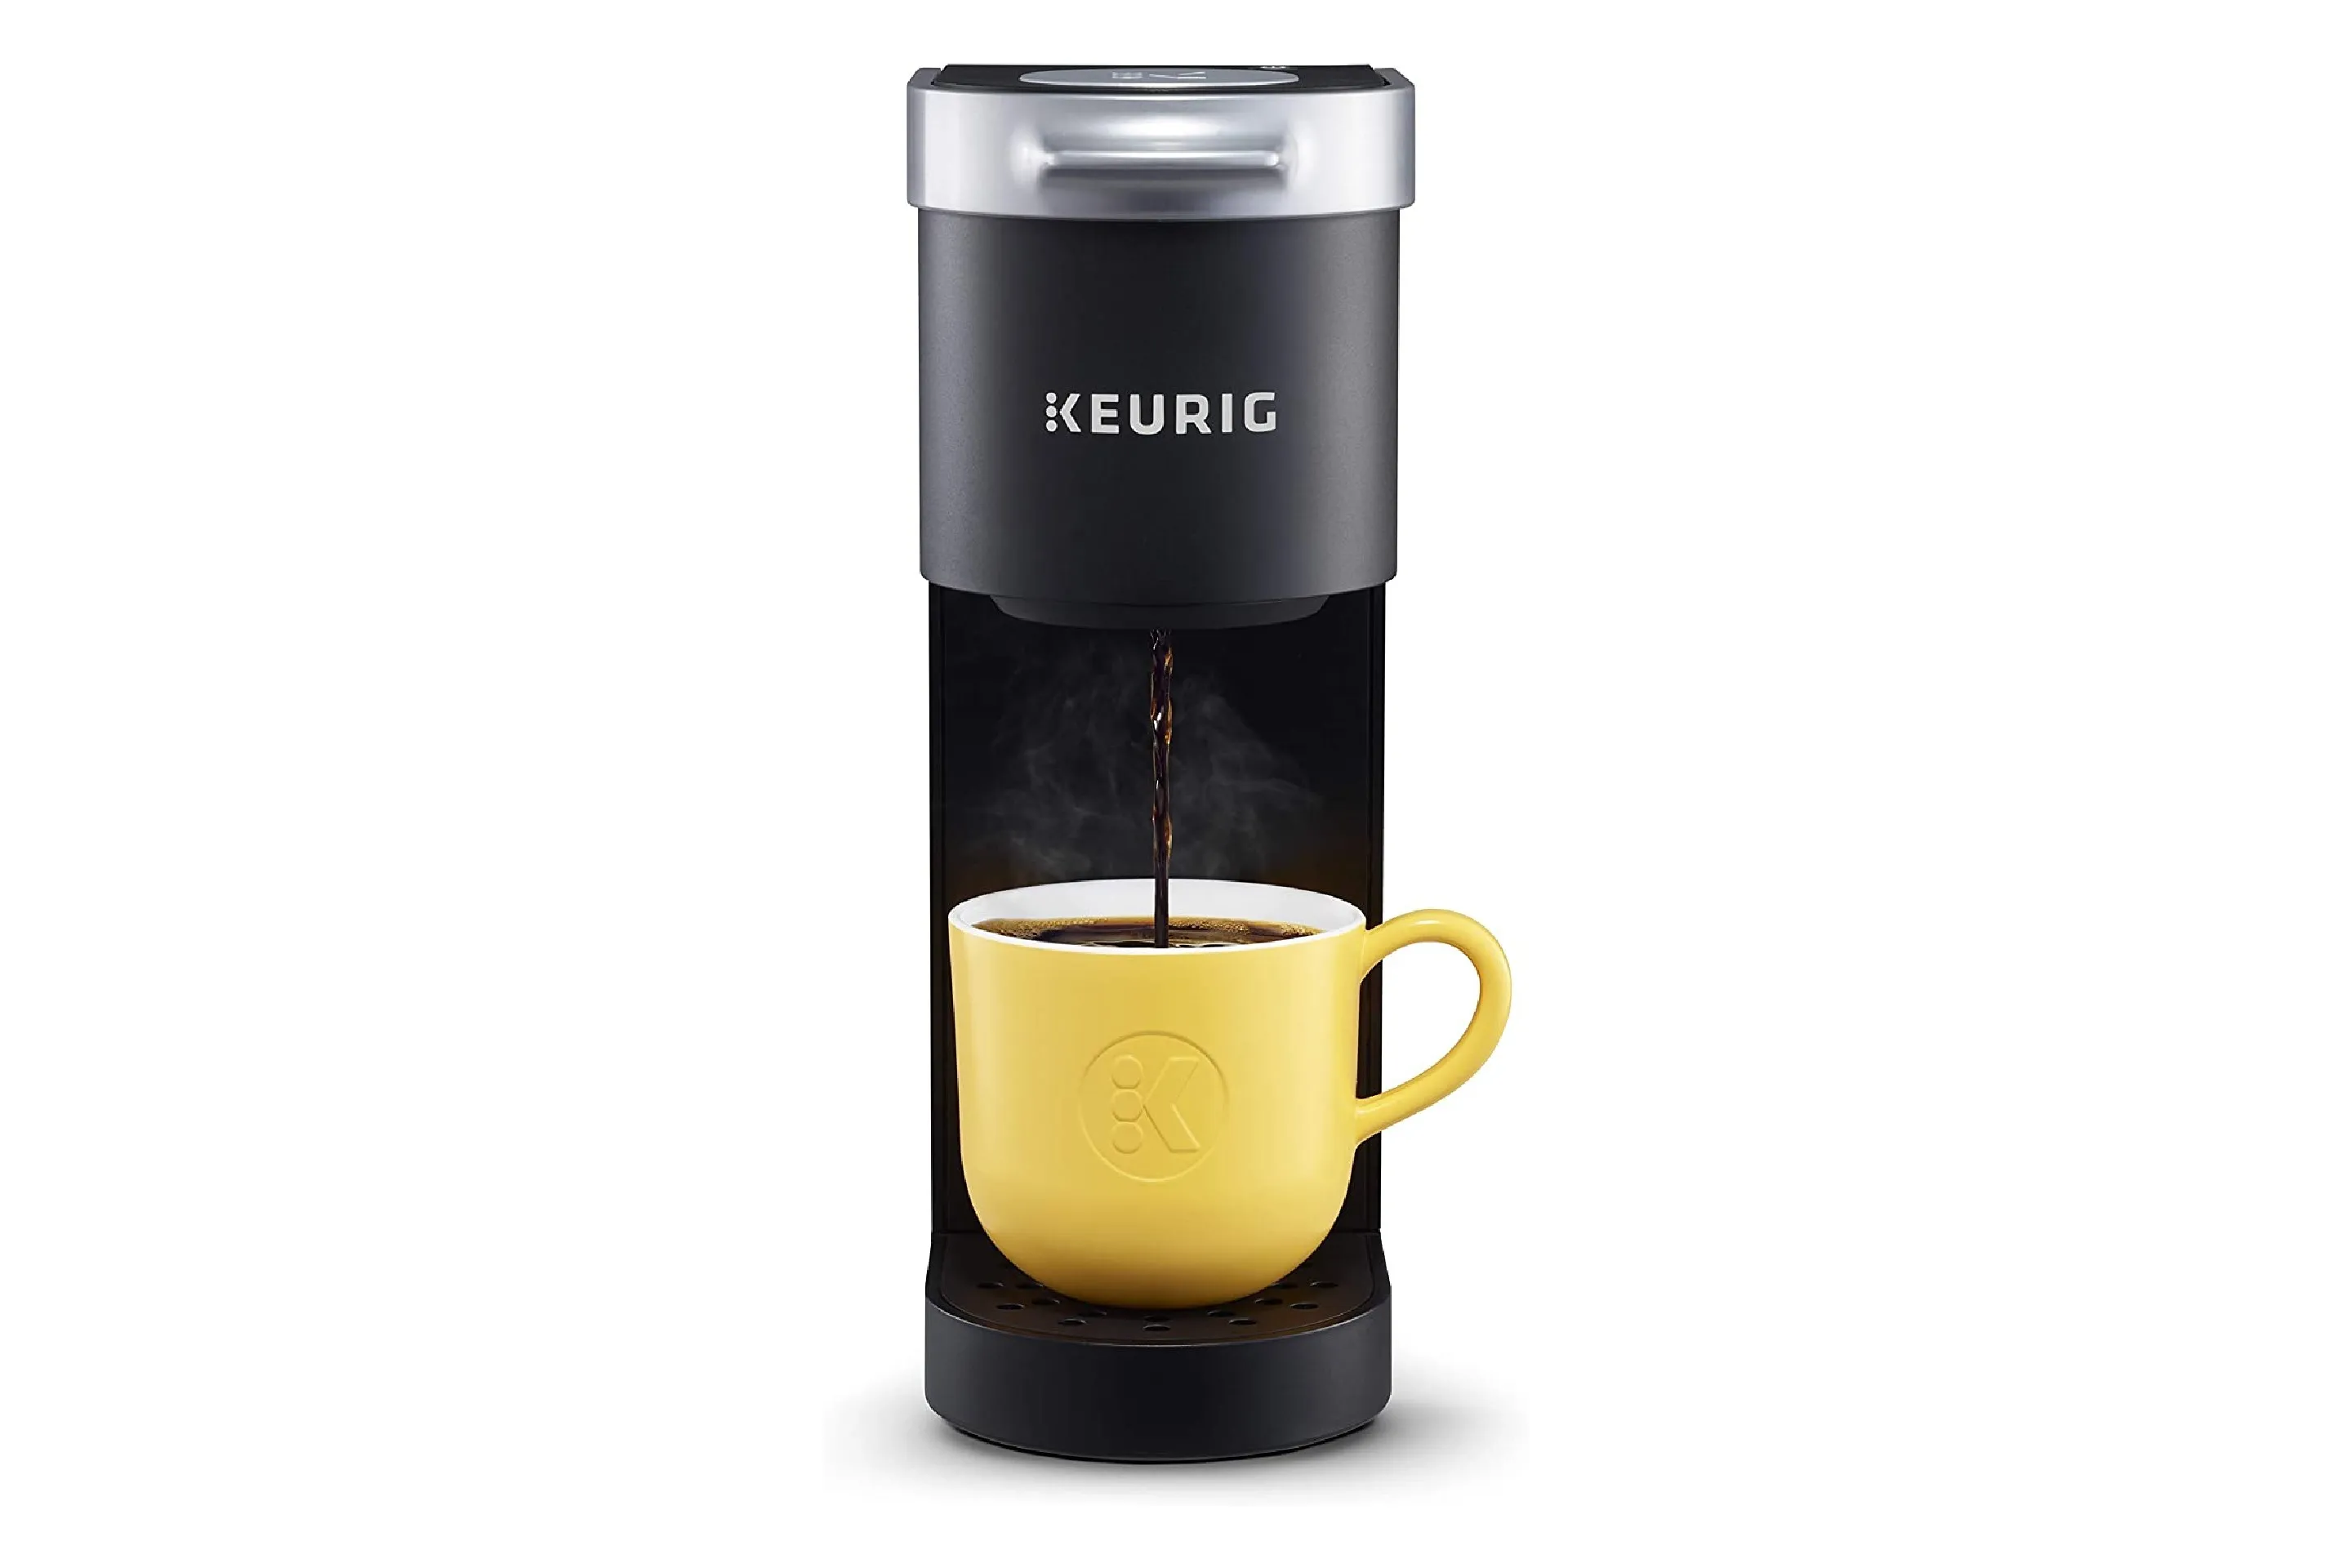 Keurig K-Mini Basic Single Cup Coffee Maker, Black